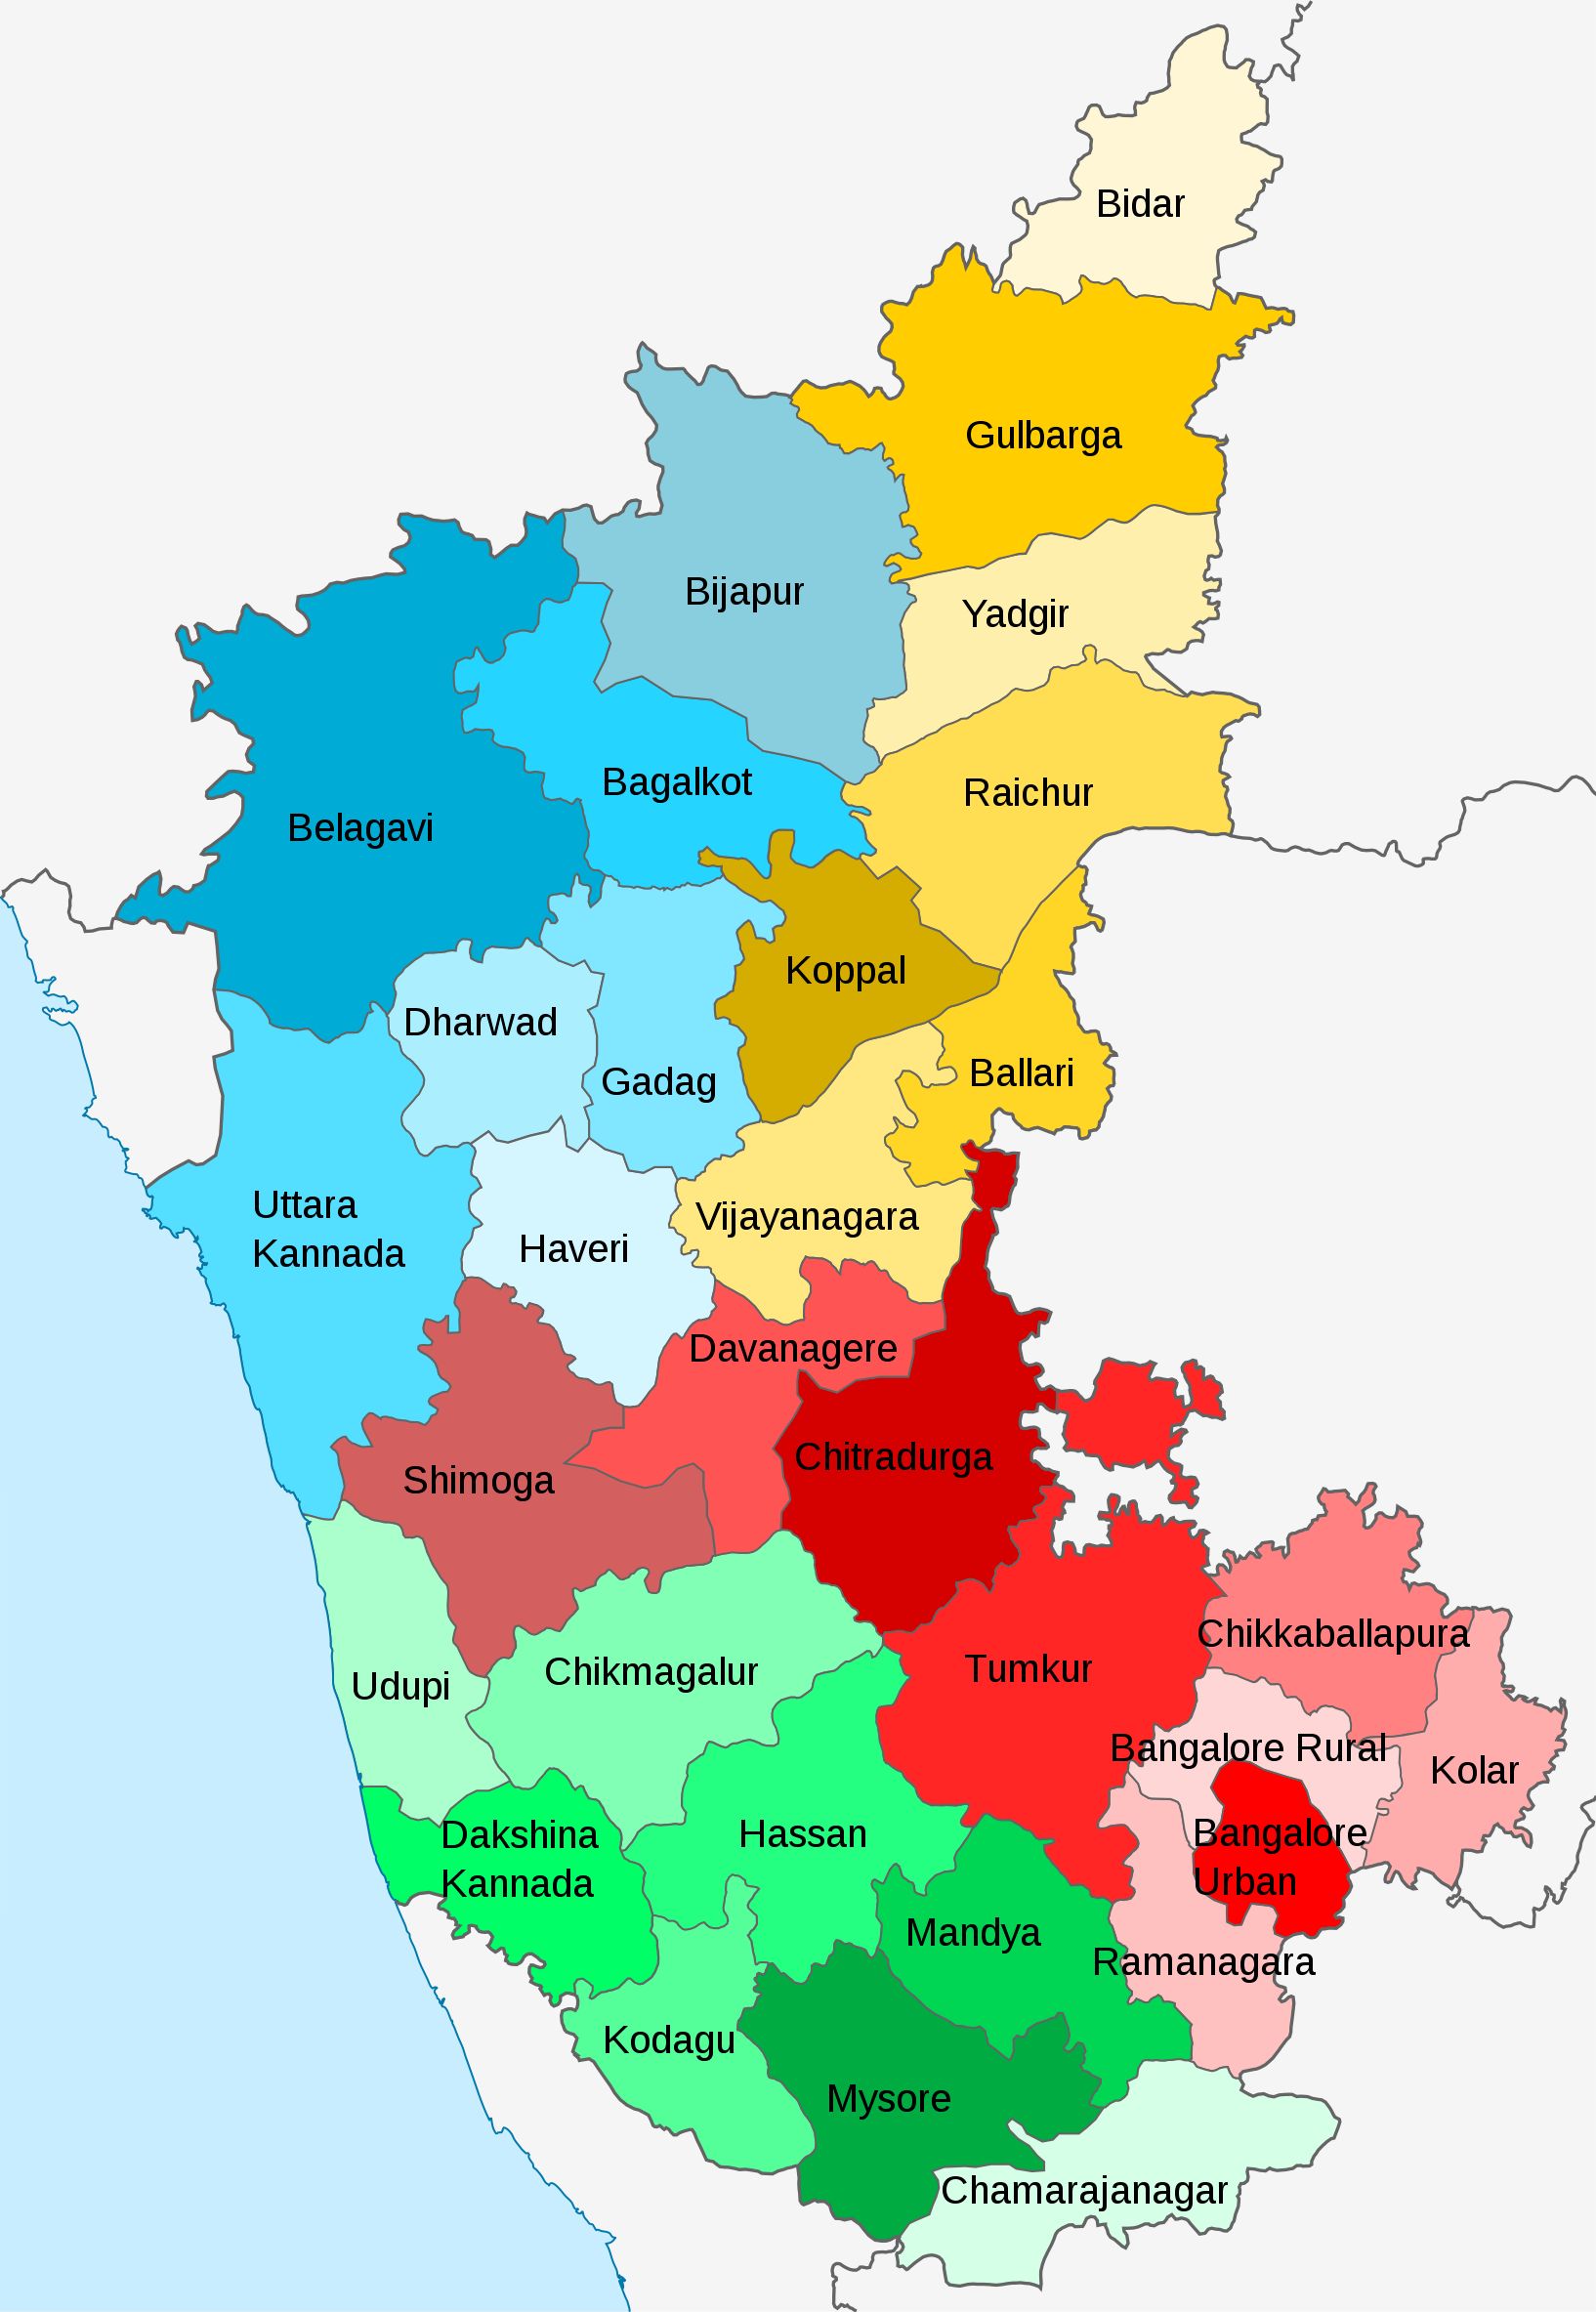 Smart Cities in Karnataka - List, Features, Status & More